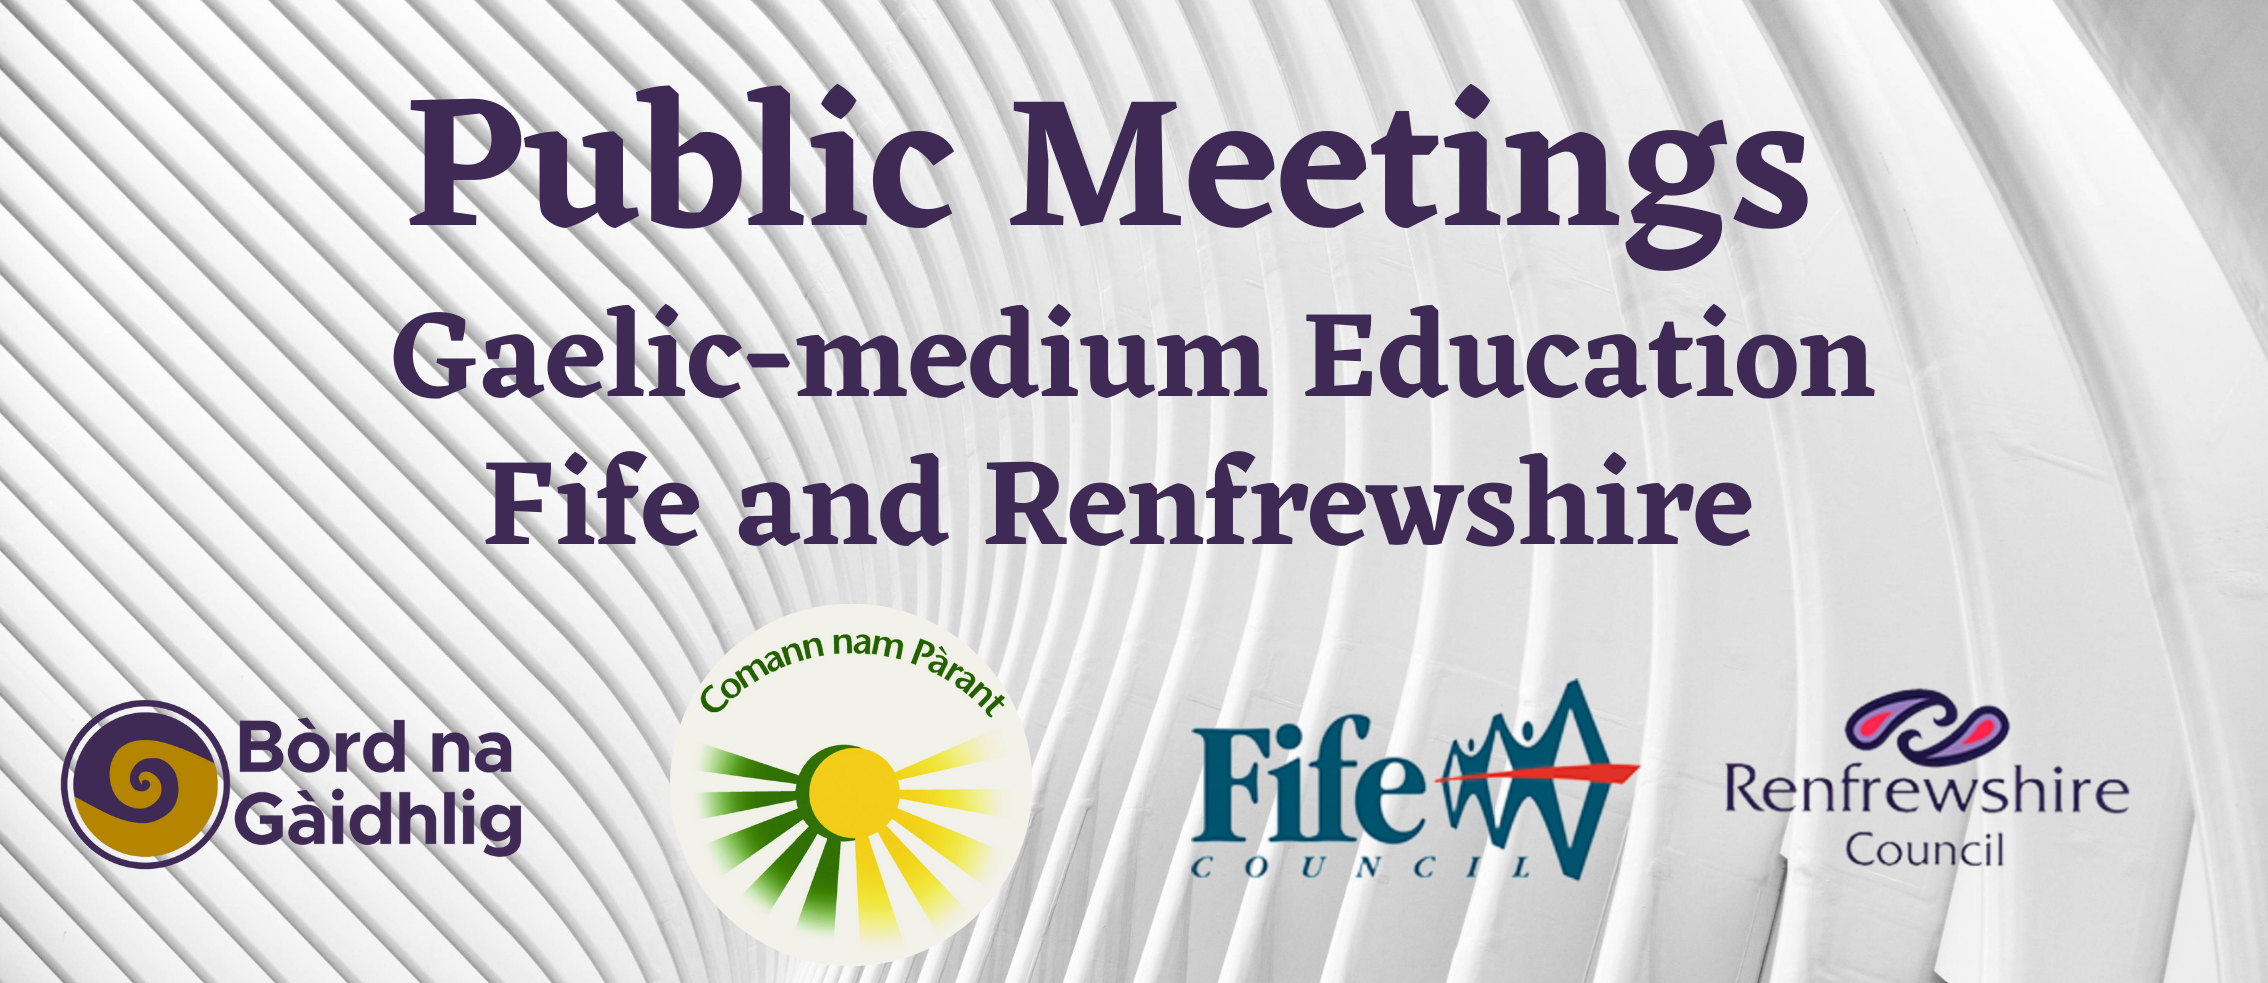 Public Meetings in Renfrewshire and Fife